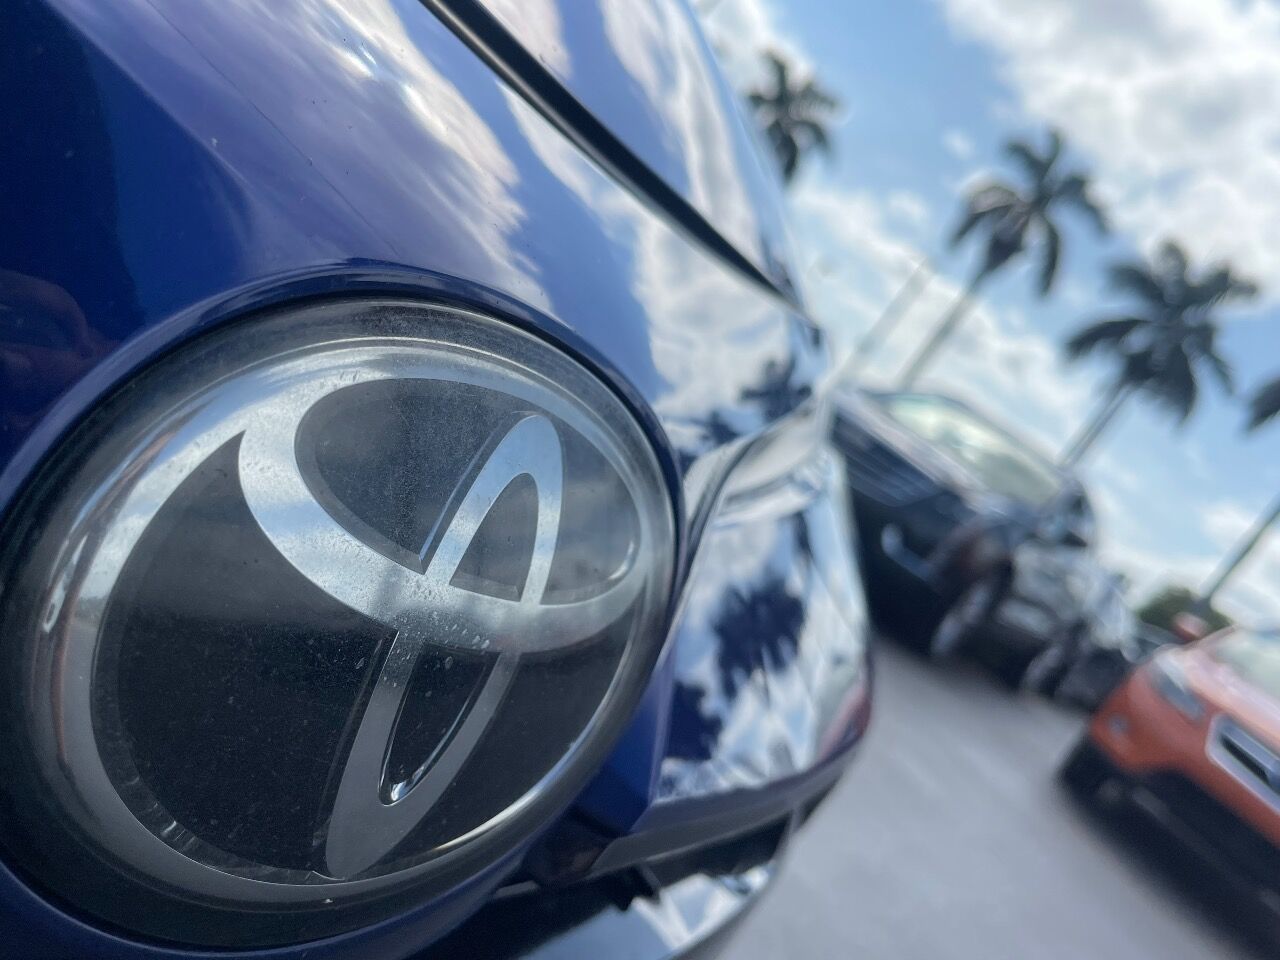 2018 TOYOTA Corolla Sedan - $13,900